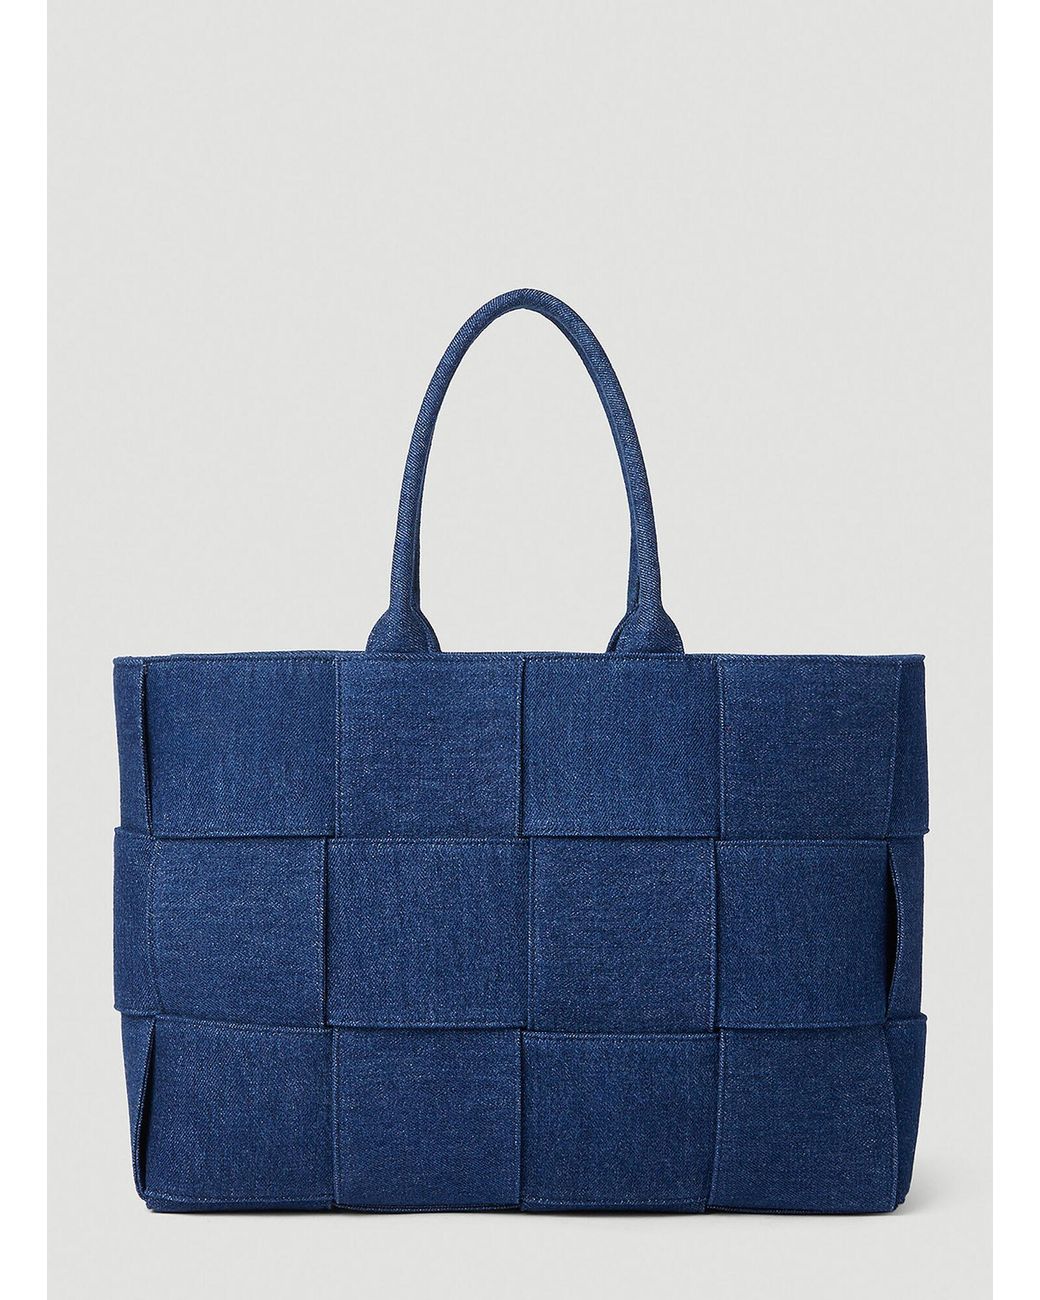 Bottega Veneta Arco Denim Tote Bag in Blue | Lyst